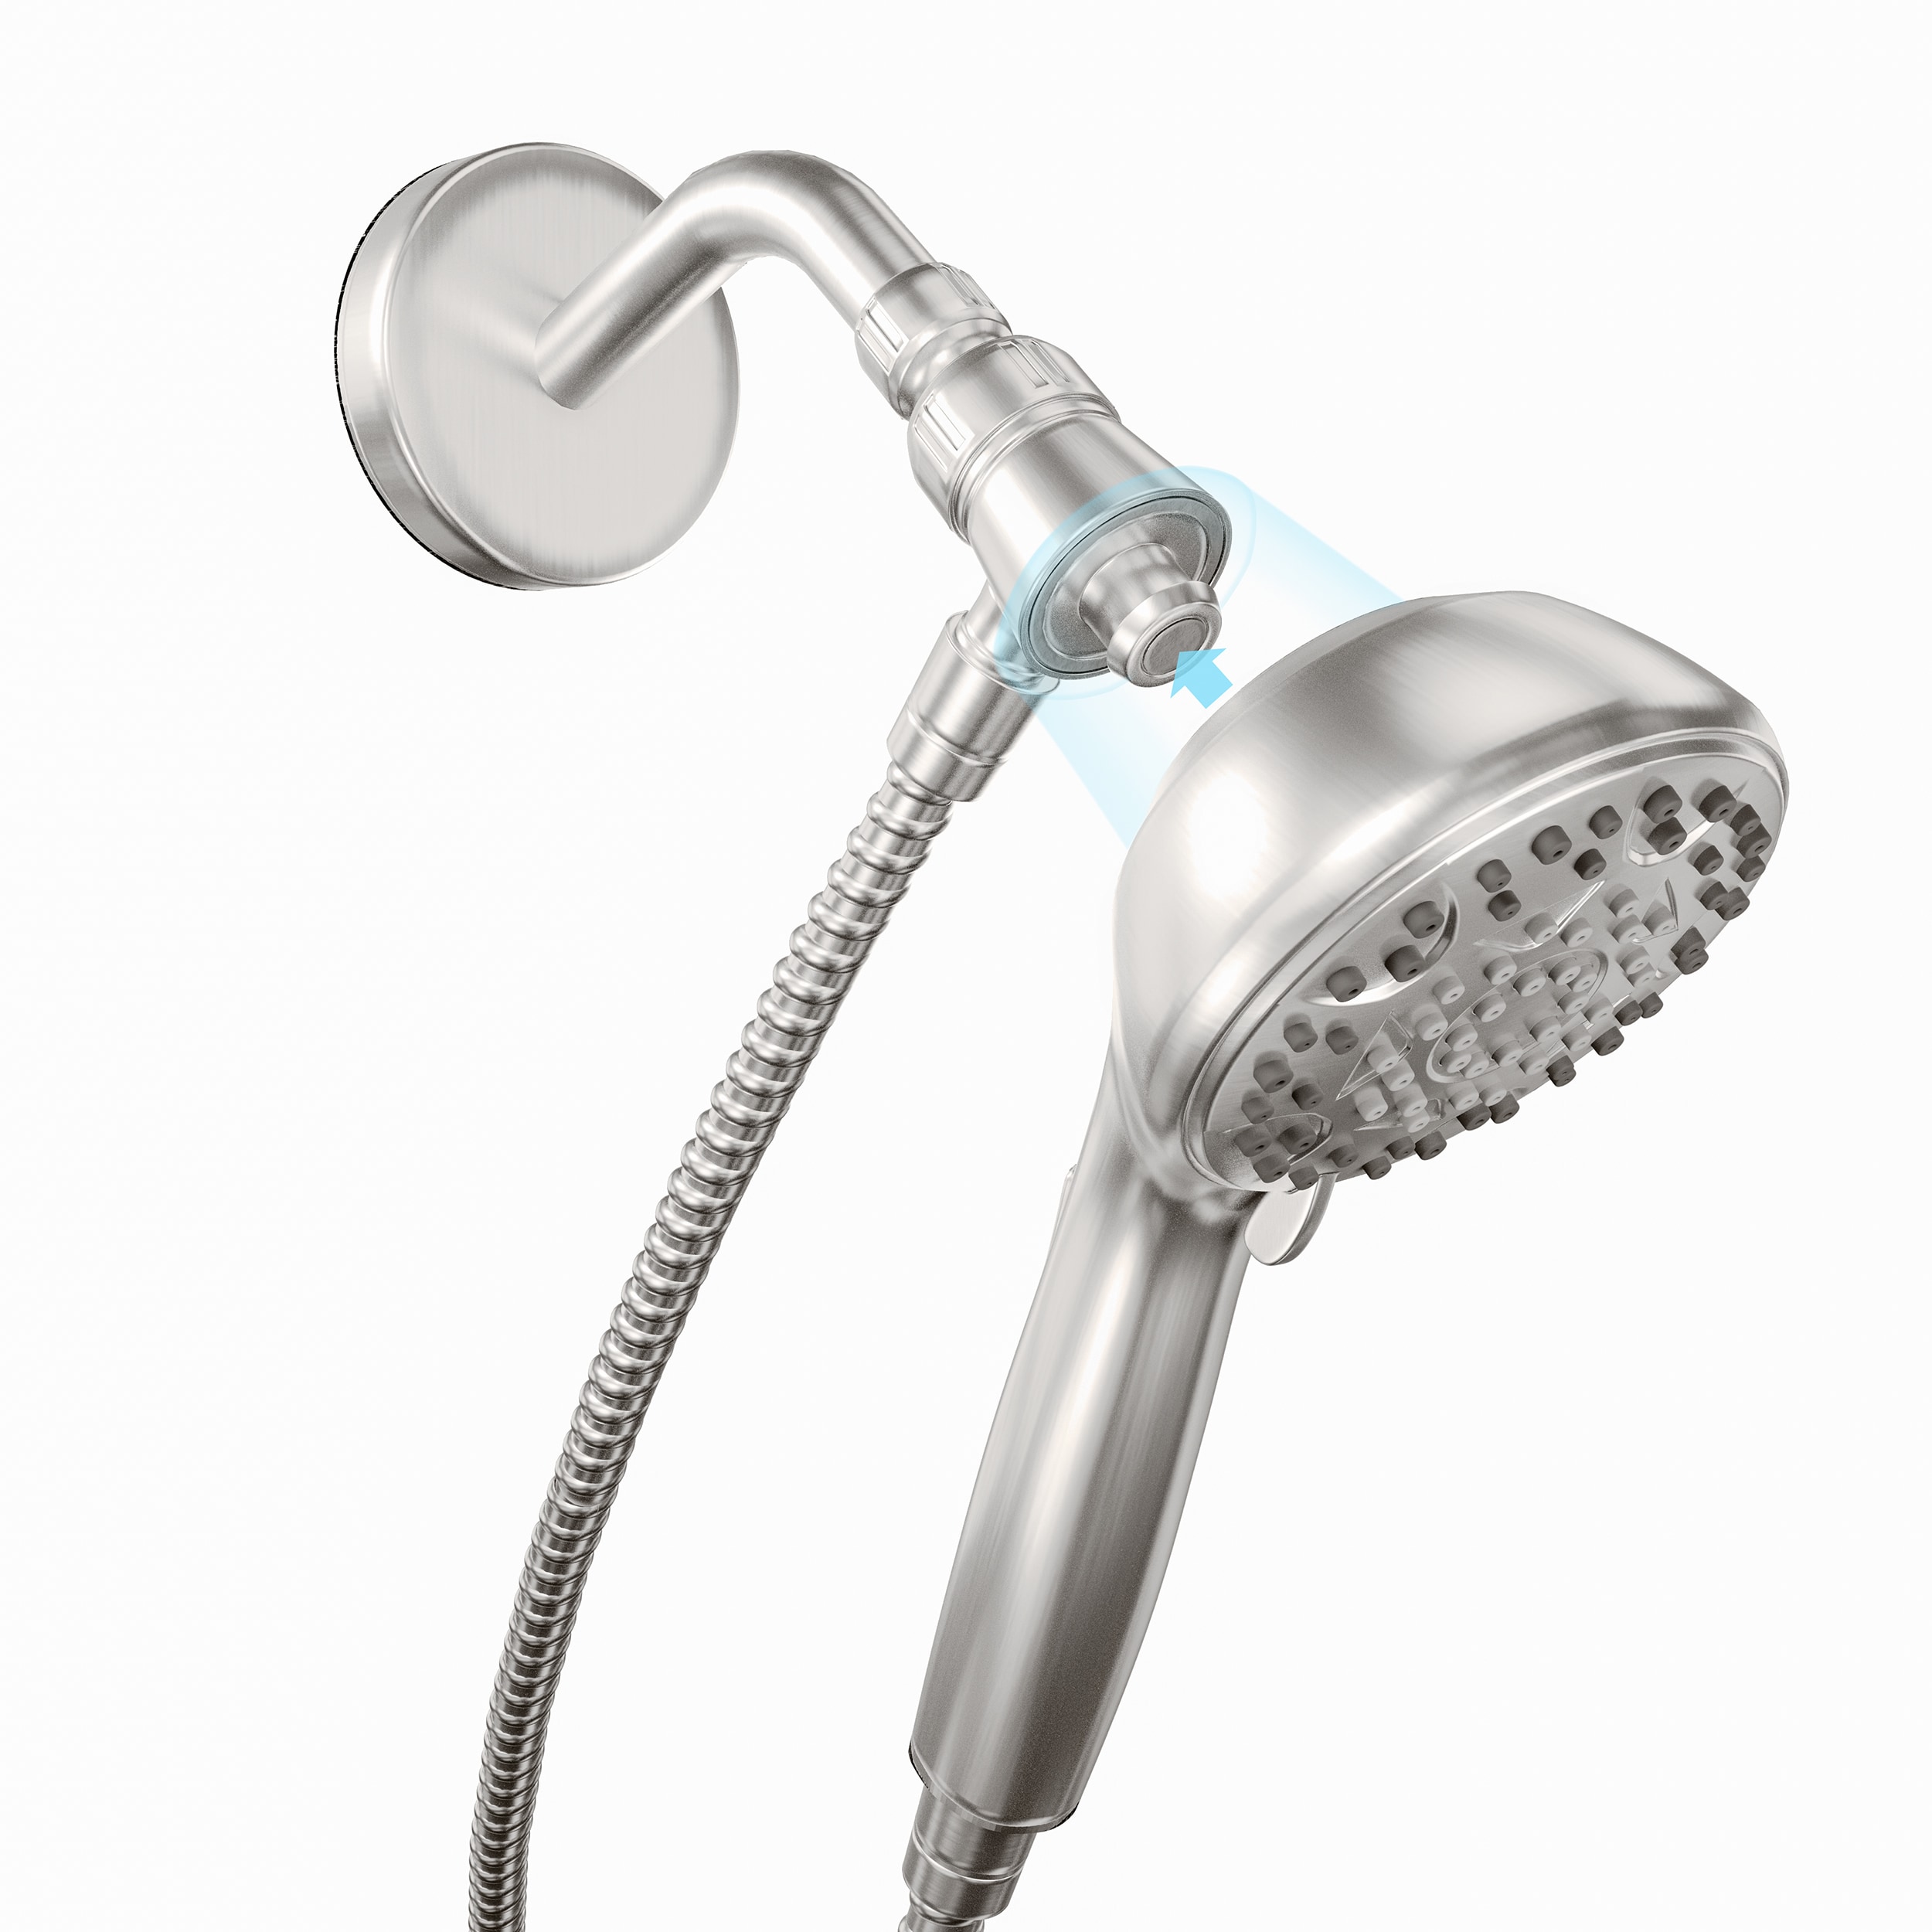 Shower Arm Holder for Handheld Shower Head, Adjustable Mount Bracket,  Shower arm Adapter with Swivel Ball, 1/2-Inch, Chrome, 0.5